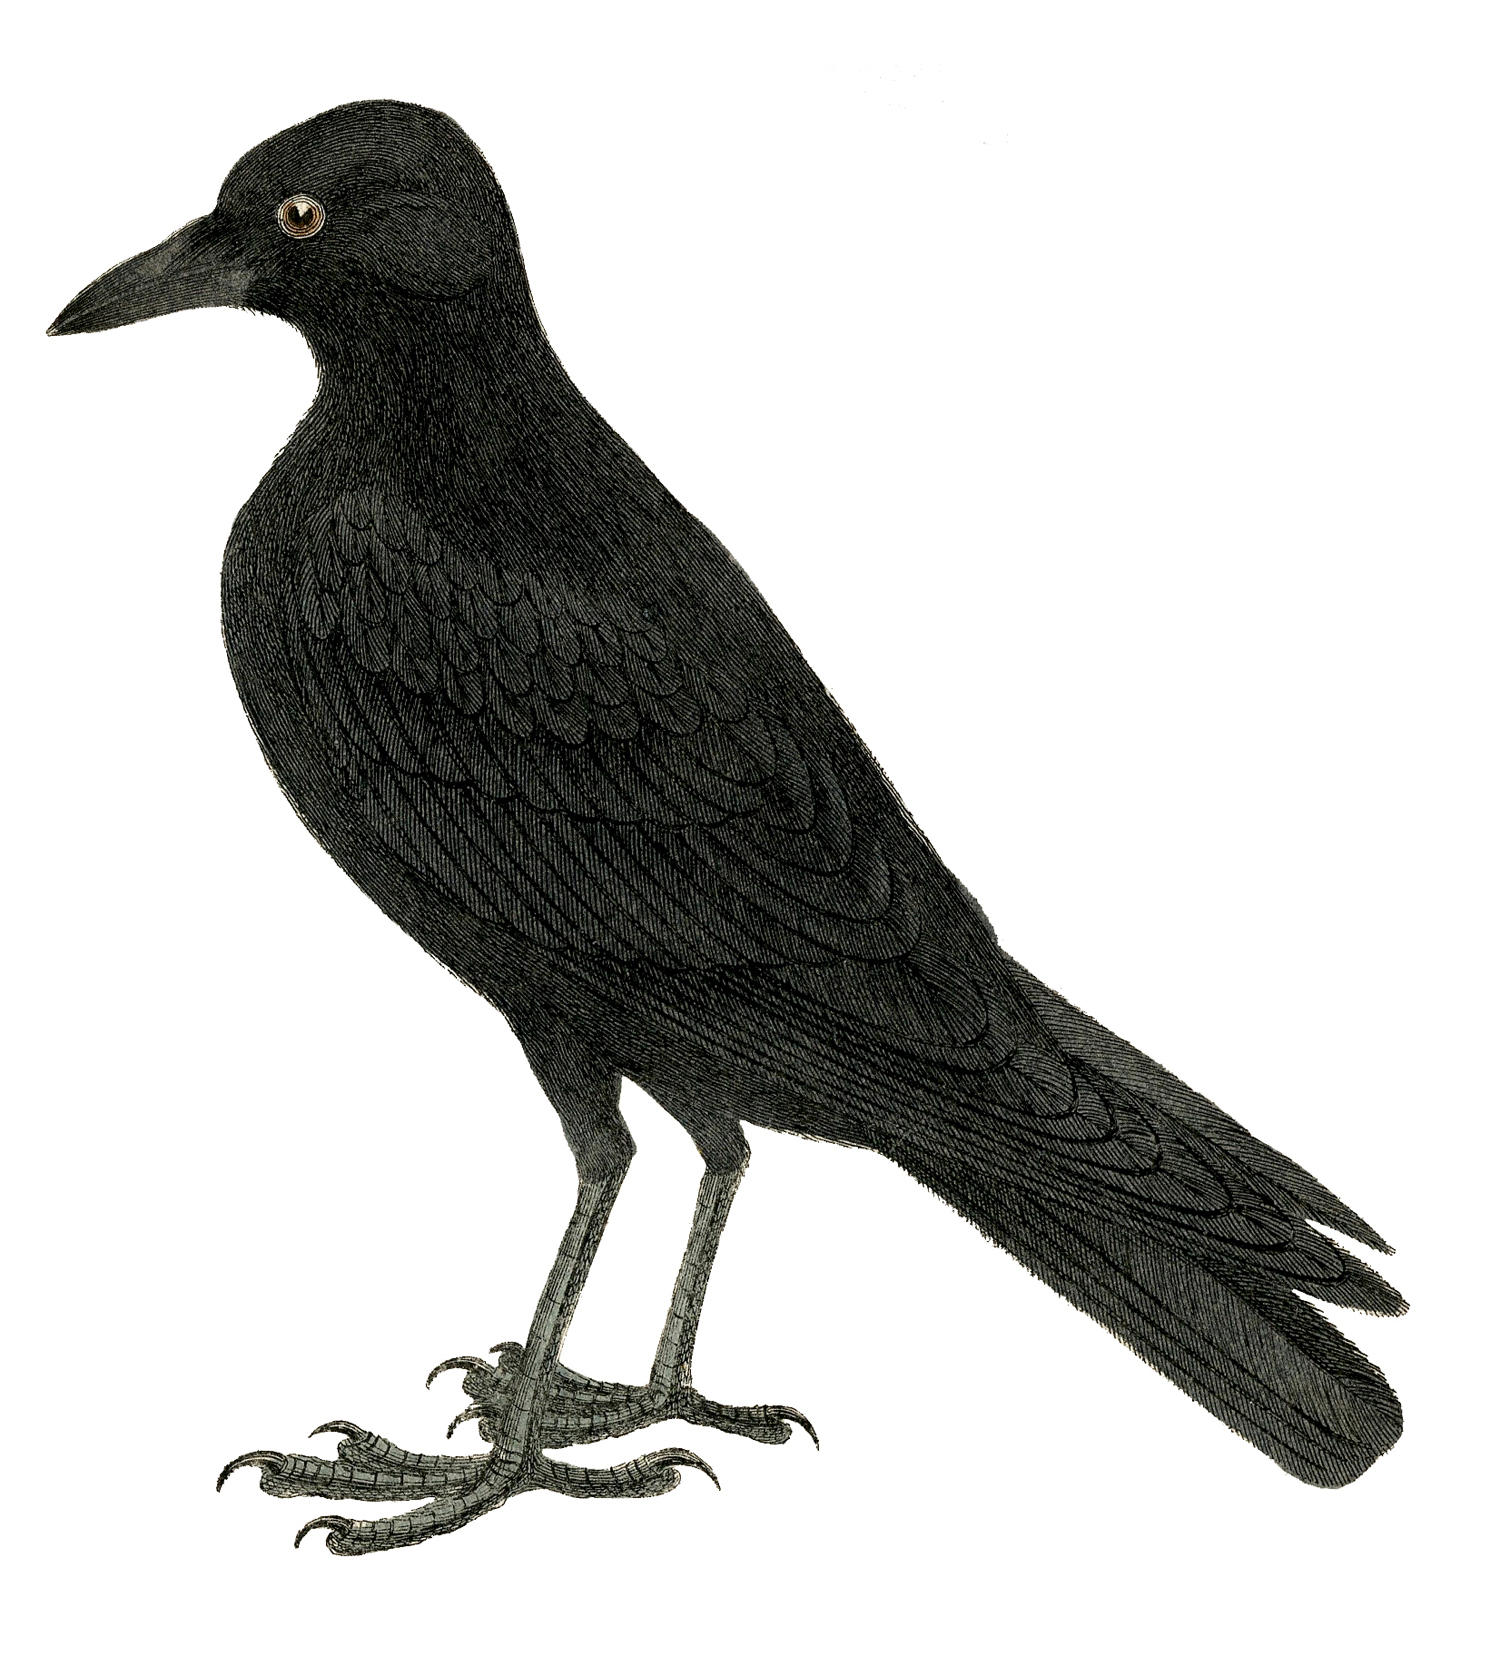 Halloween Crow Image or Raven - The Graphics Fairy